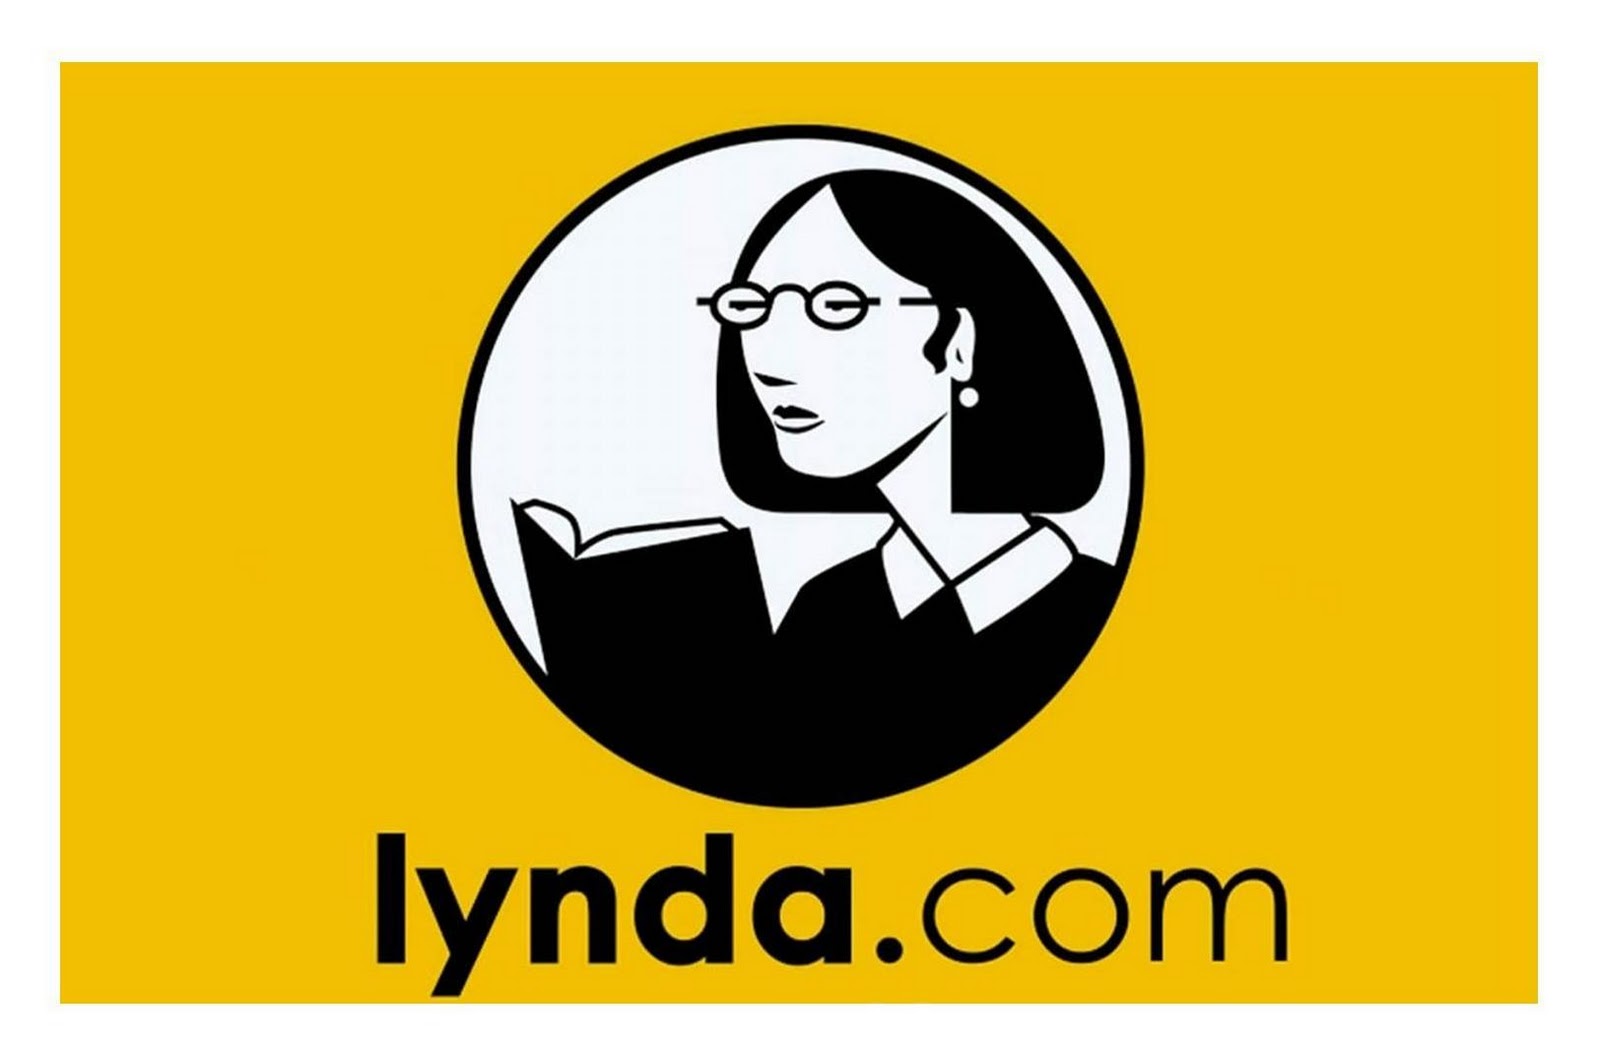 Lynda.com-logo